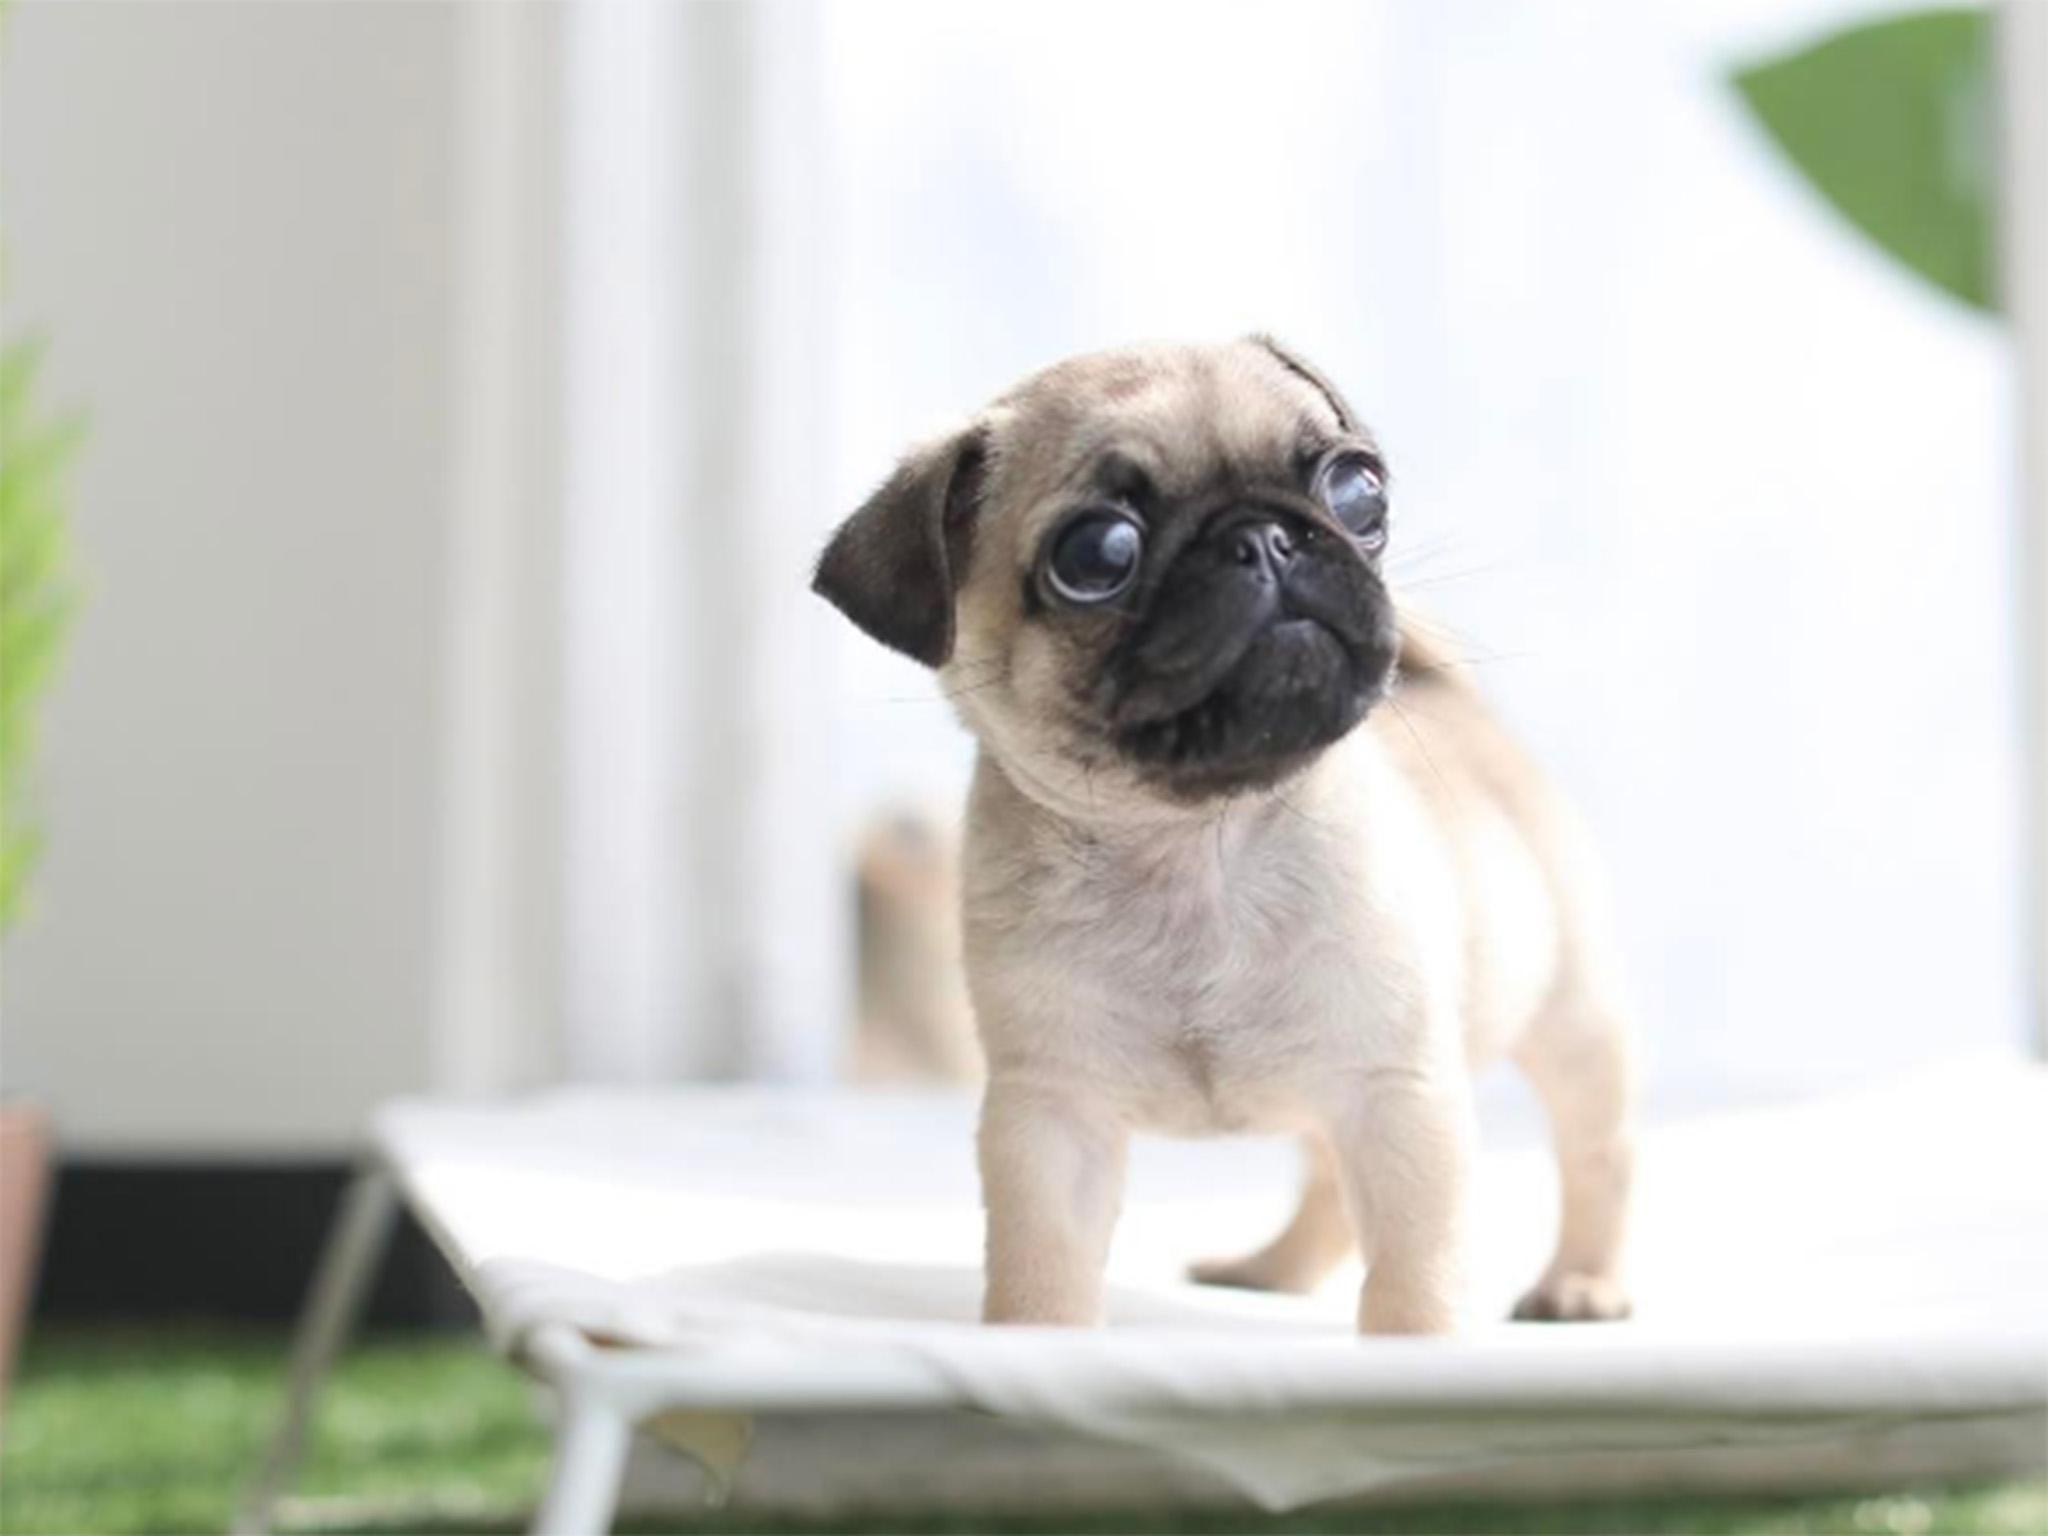 Dog welfare groups warn teacup puppy craze is harmful to pets